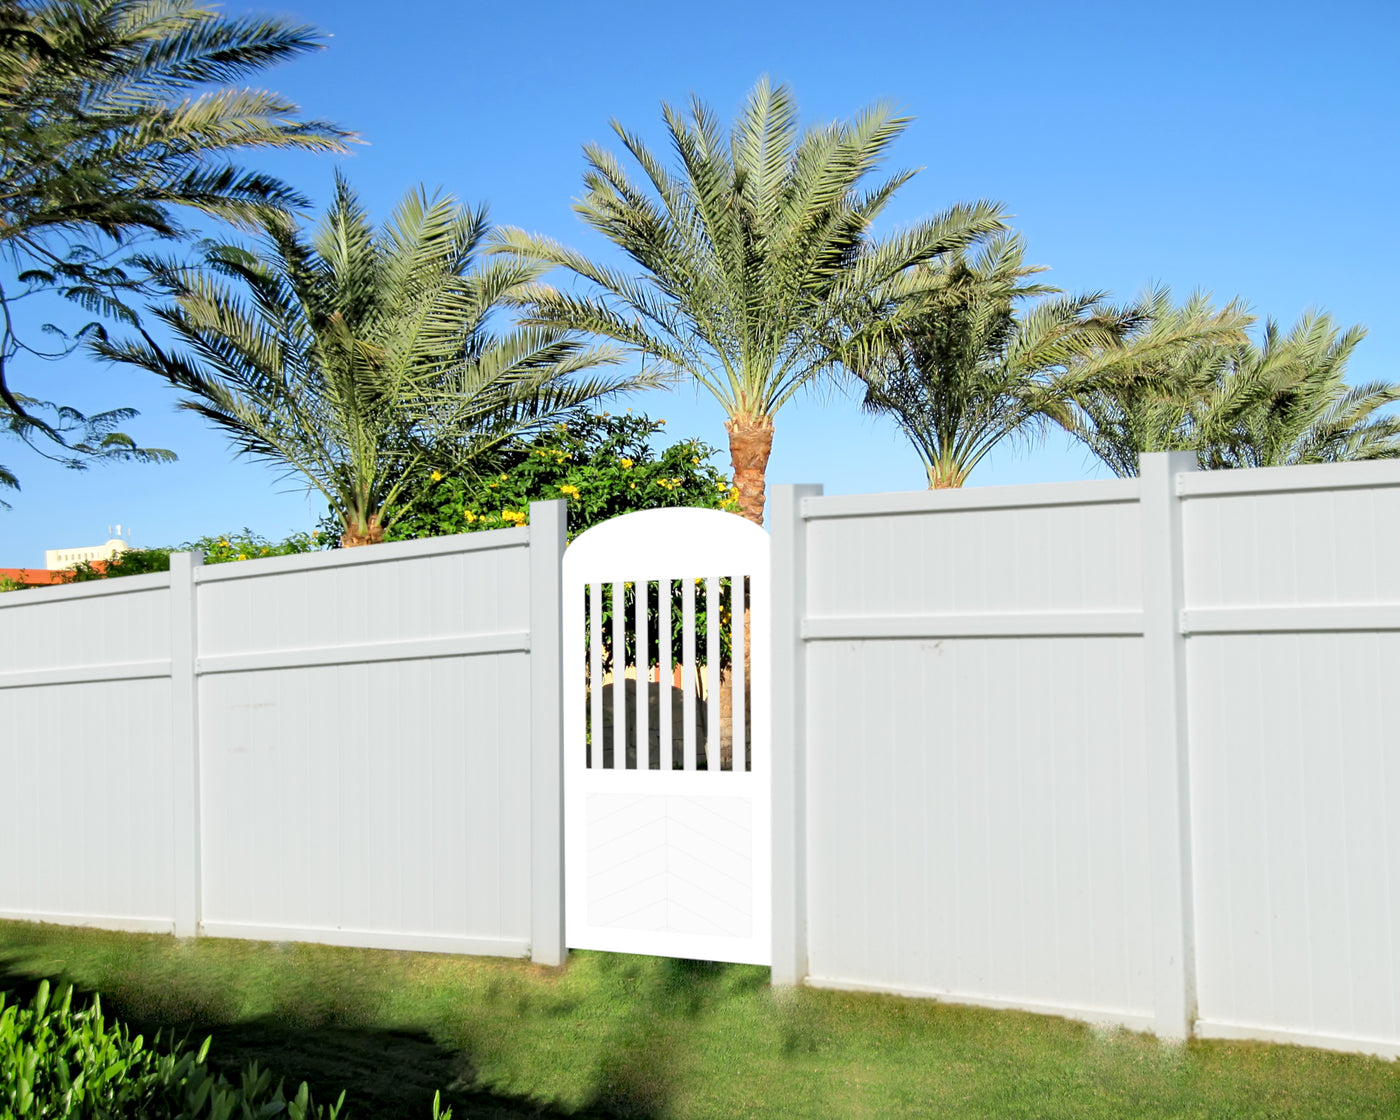 6 Foot Outdoor Gate, HDPE Plastic, Weather Resistant - exteriorplastics - Gates